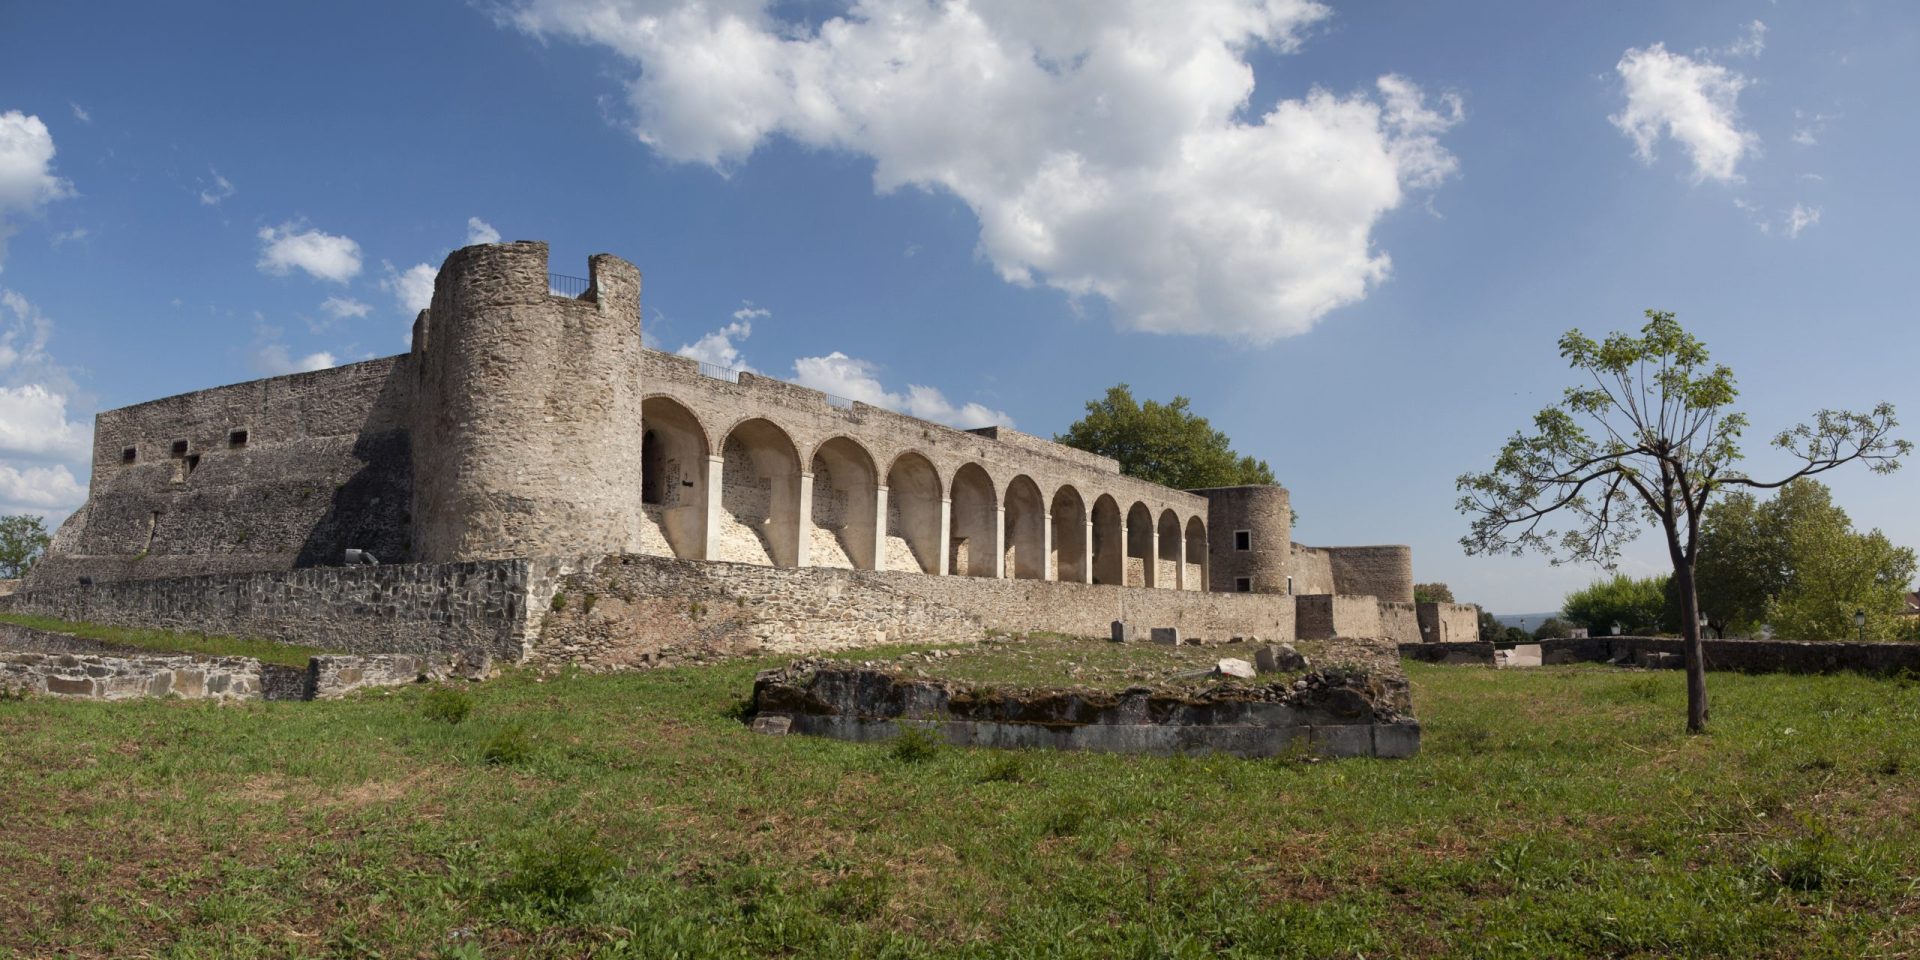 Descoberta arqueológica no castelo de Abrantes